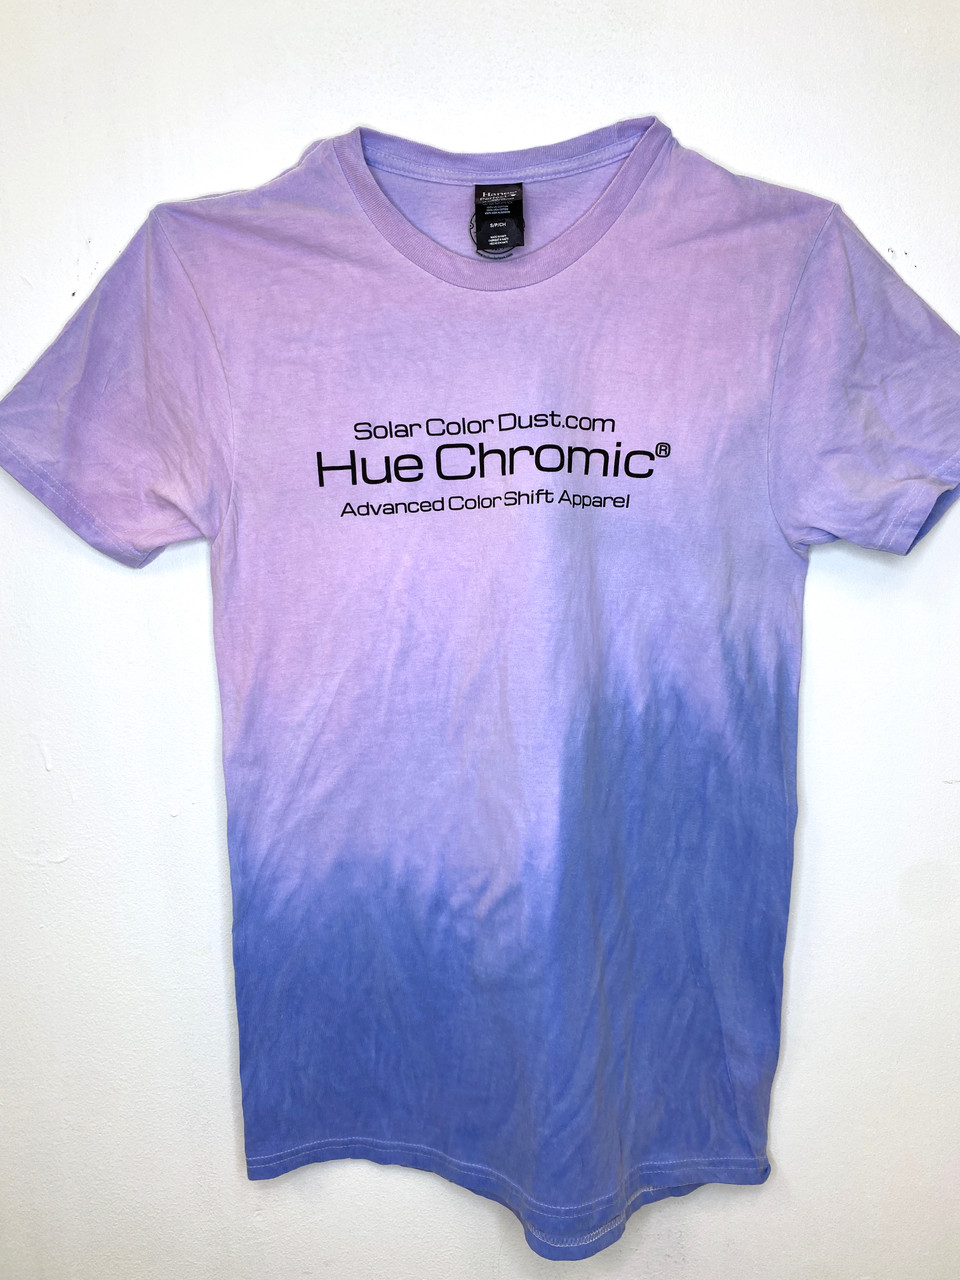 Hue Chromic® Solar Fabric Dye - Colorless to Purple